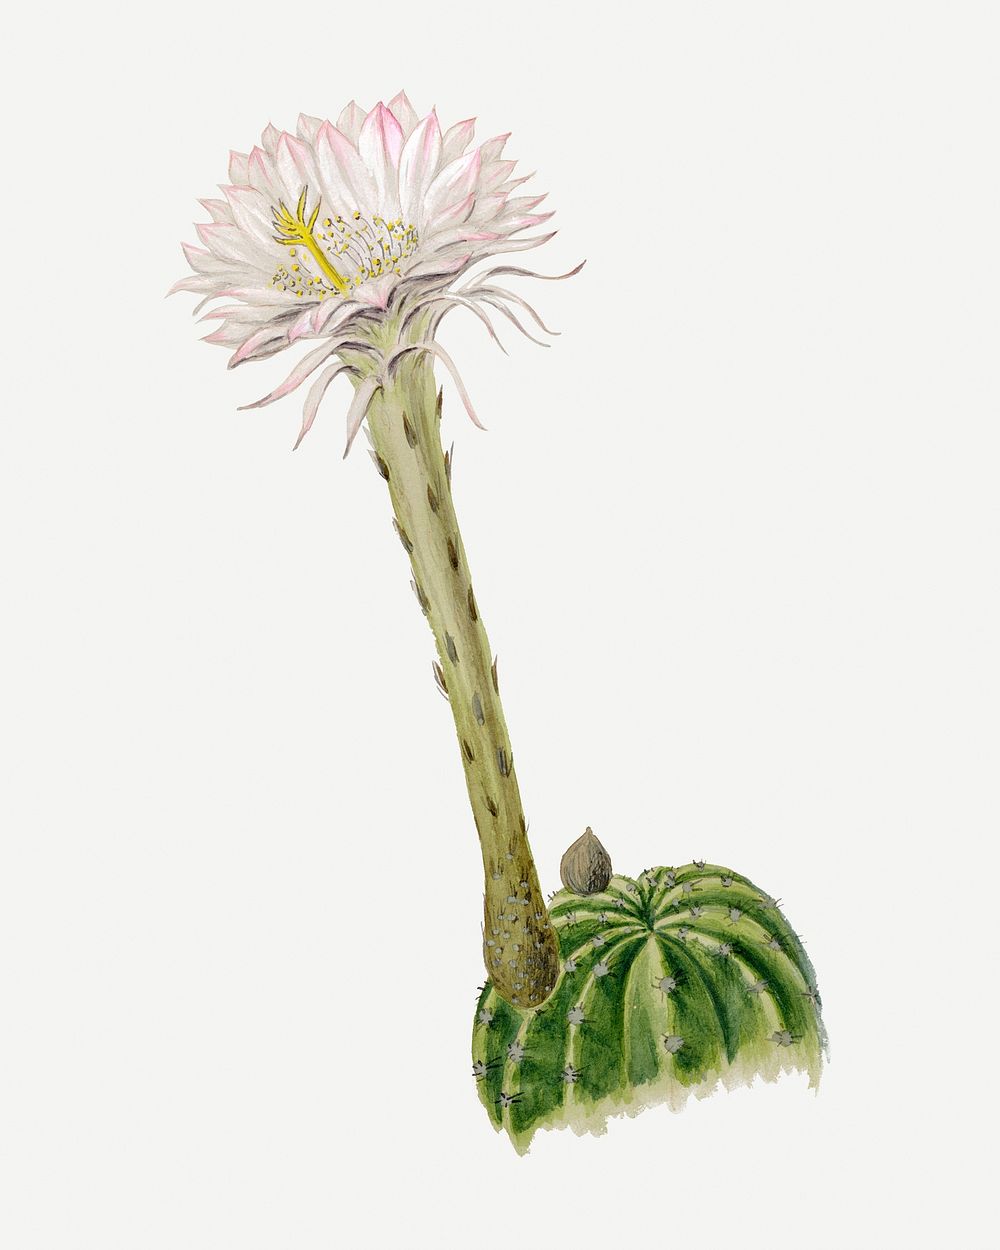 Hedgehog cactus drawing, aesthetic vintage flower illustration